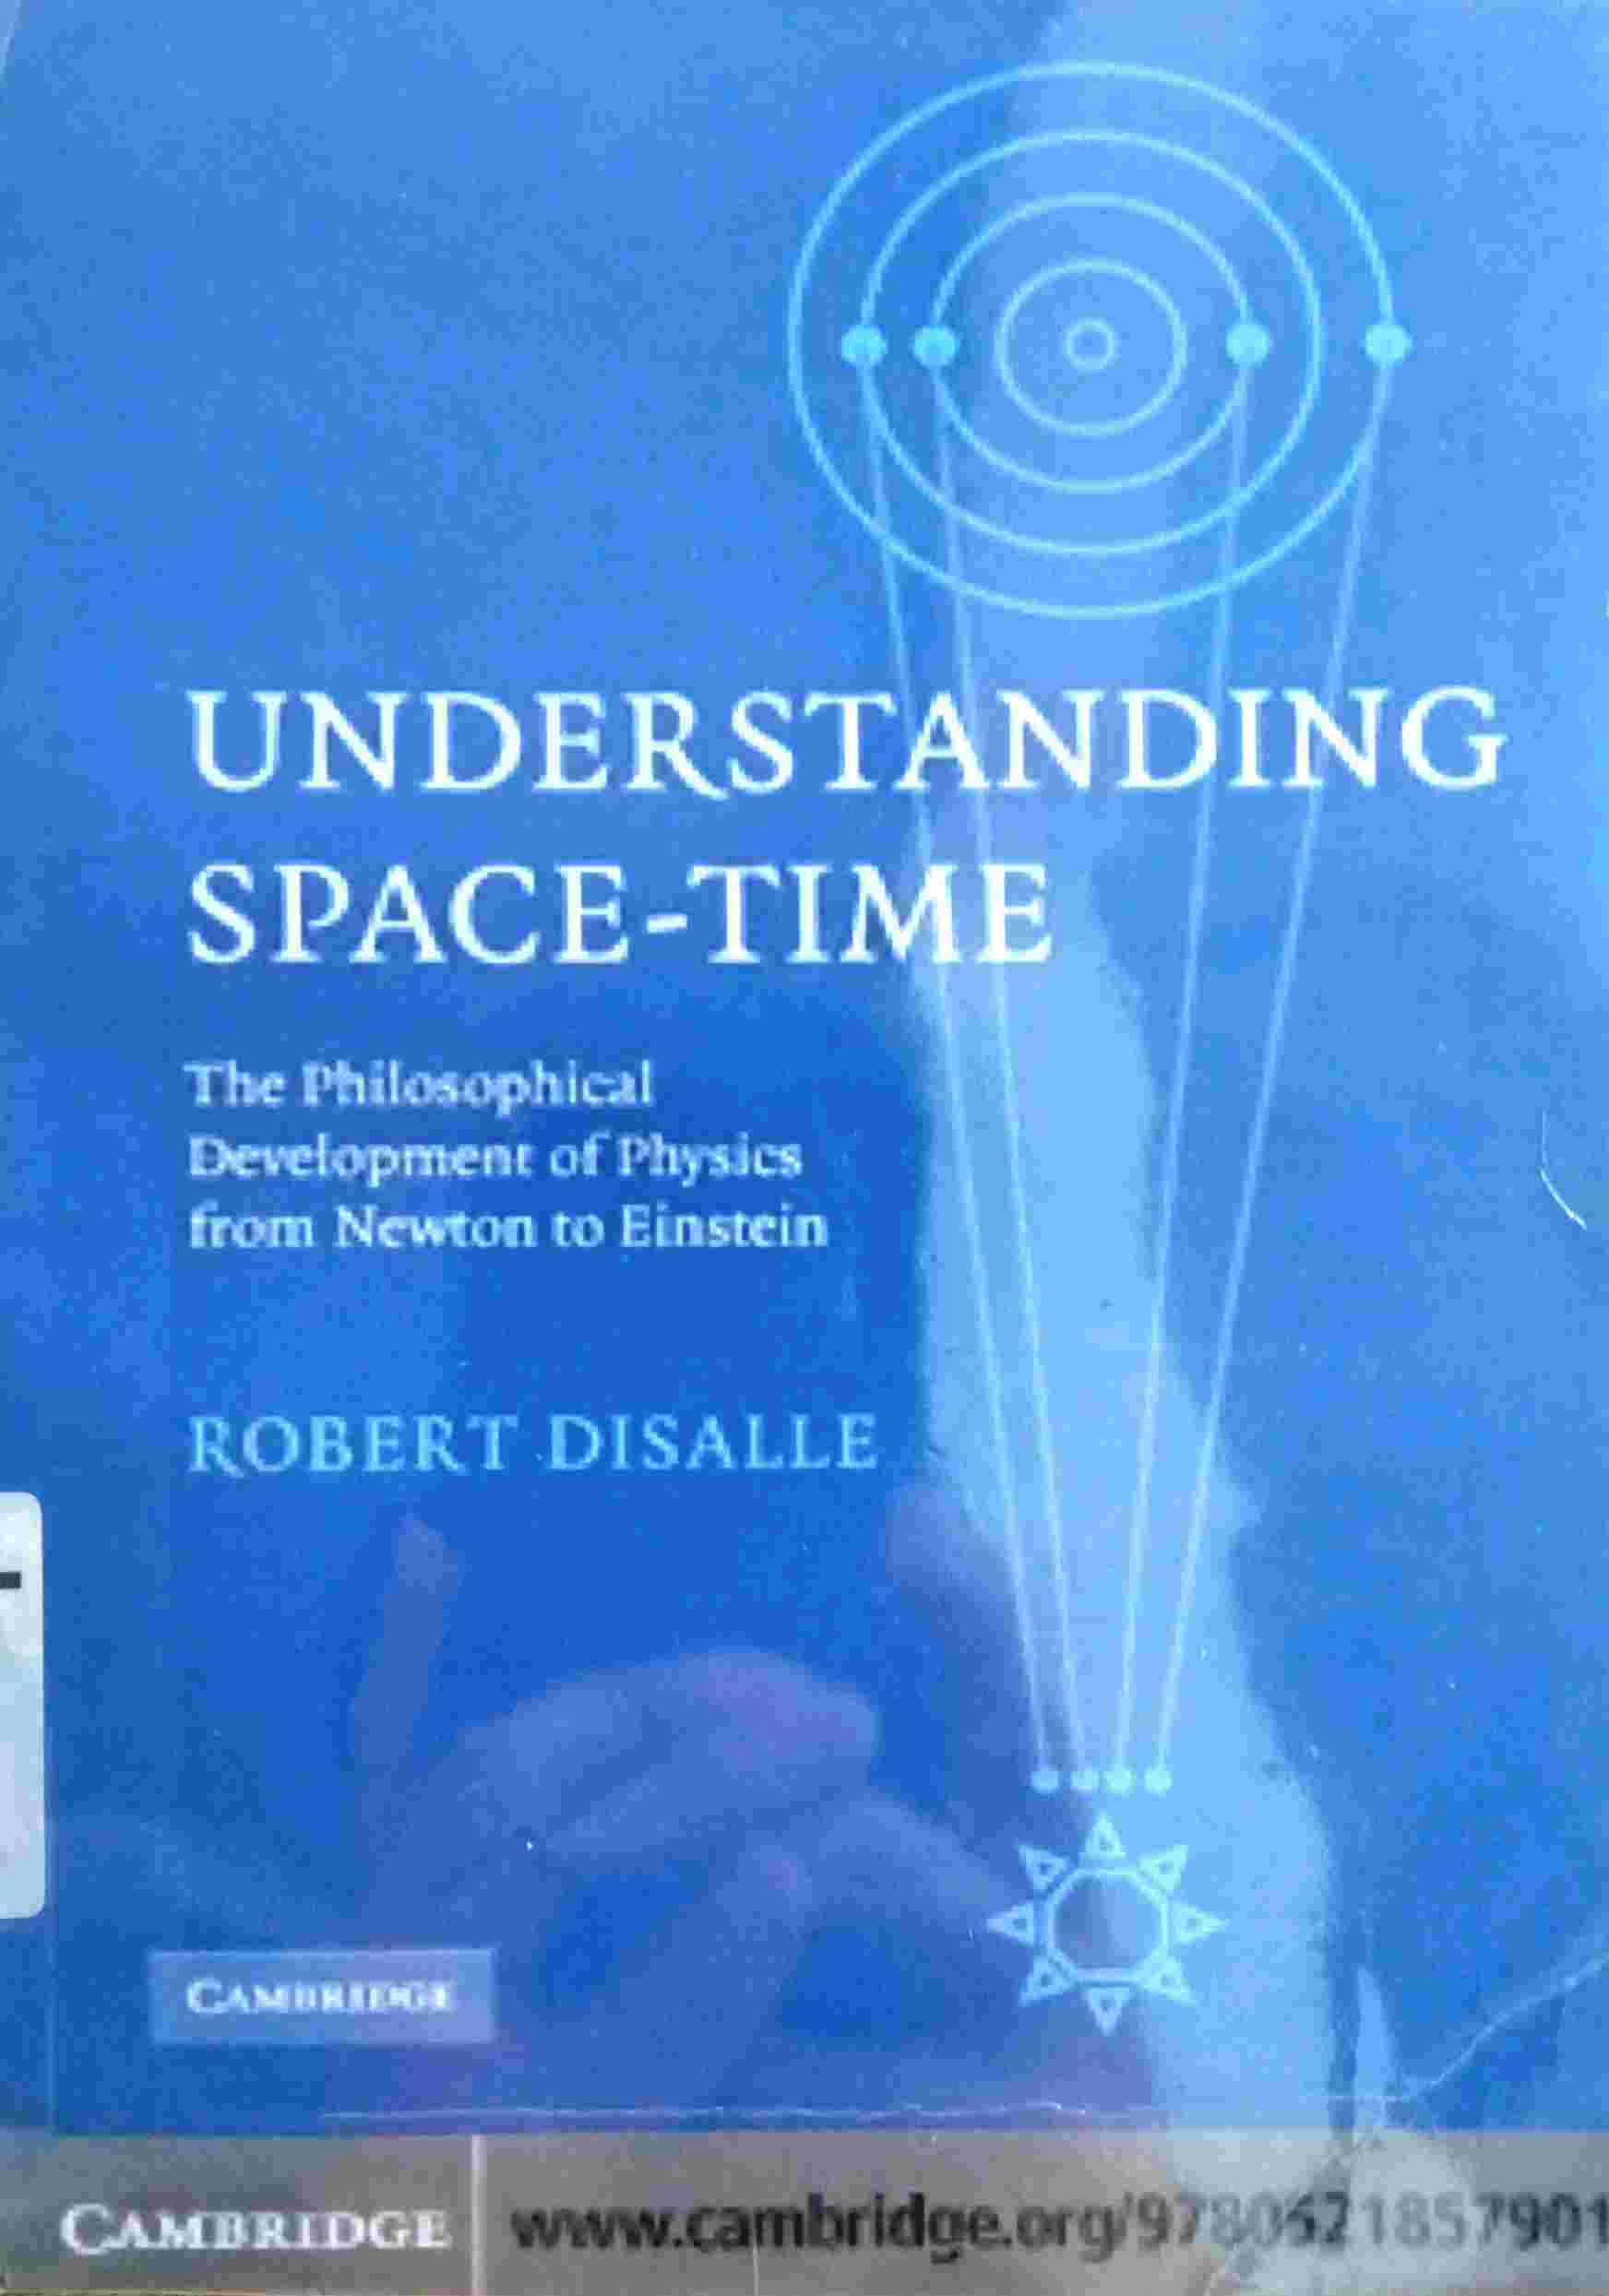 UNDERSTANDING SPACE-TIME